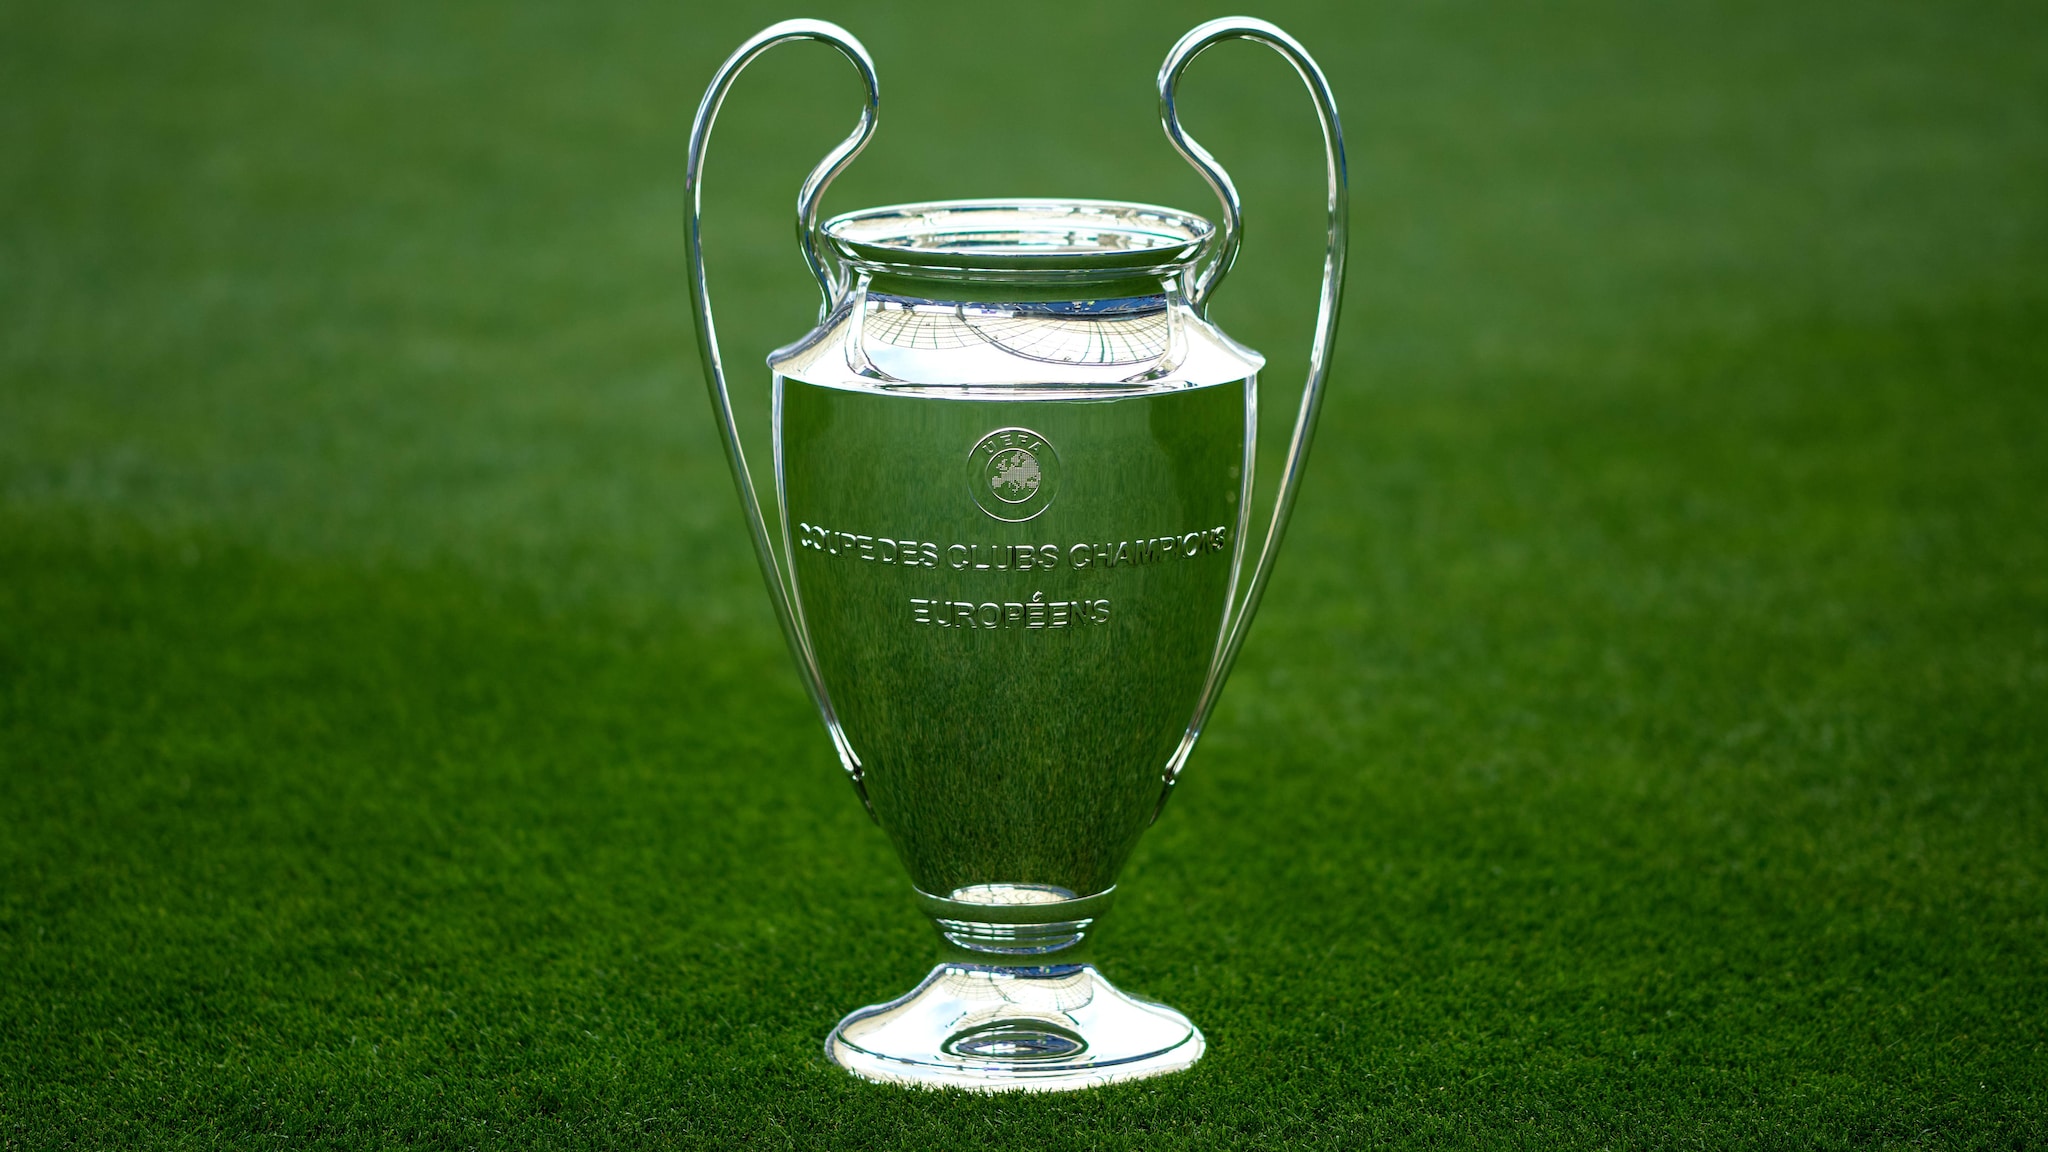 2022/23 UEFA Champions League: Matches, draws, final, UEFA Champions  League